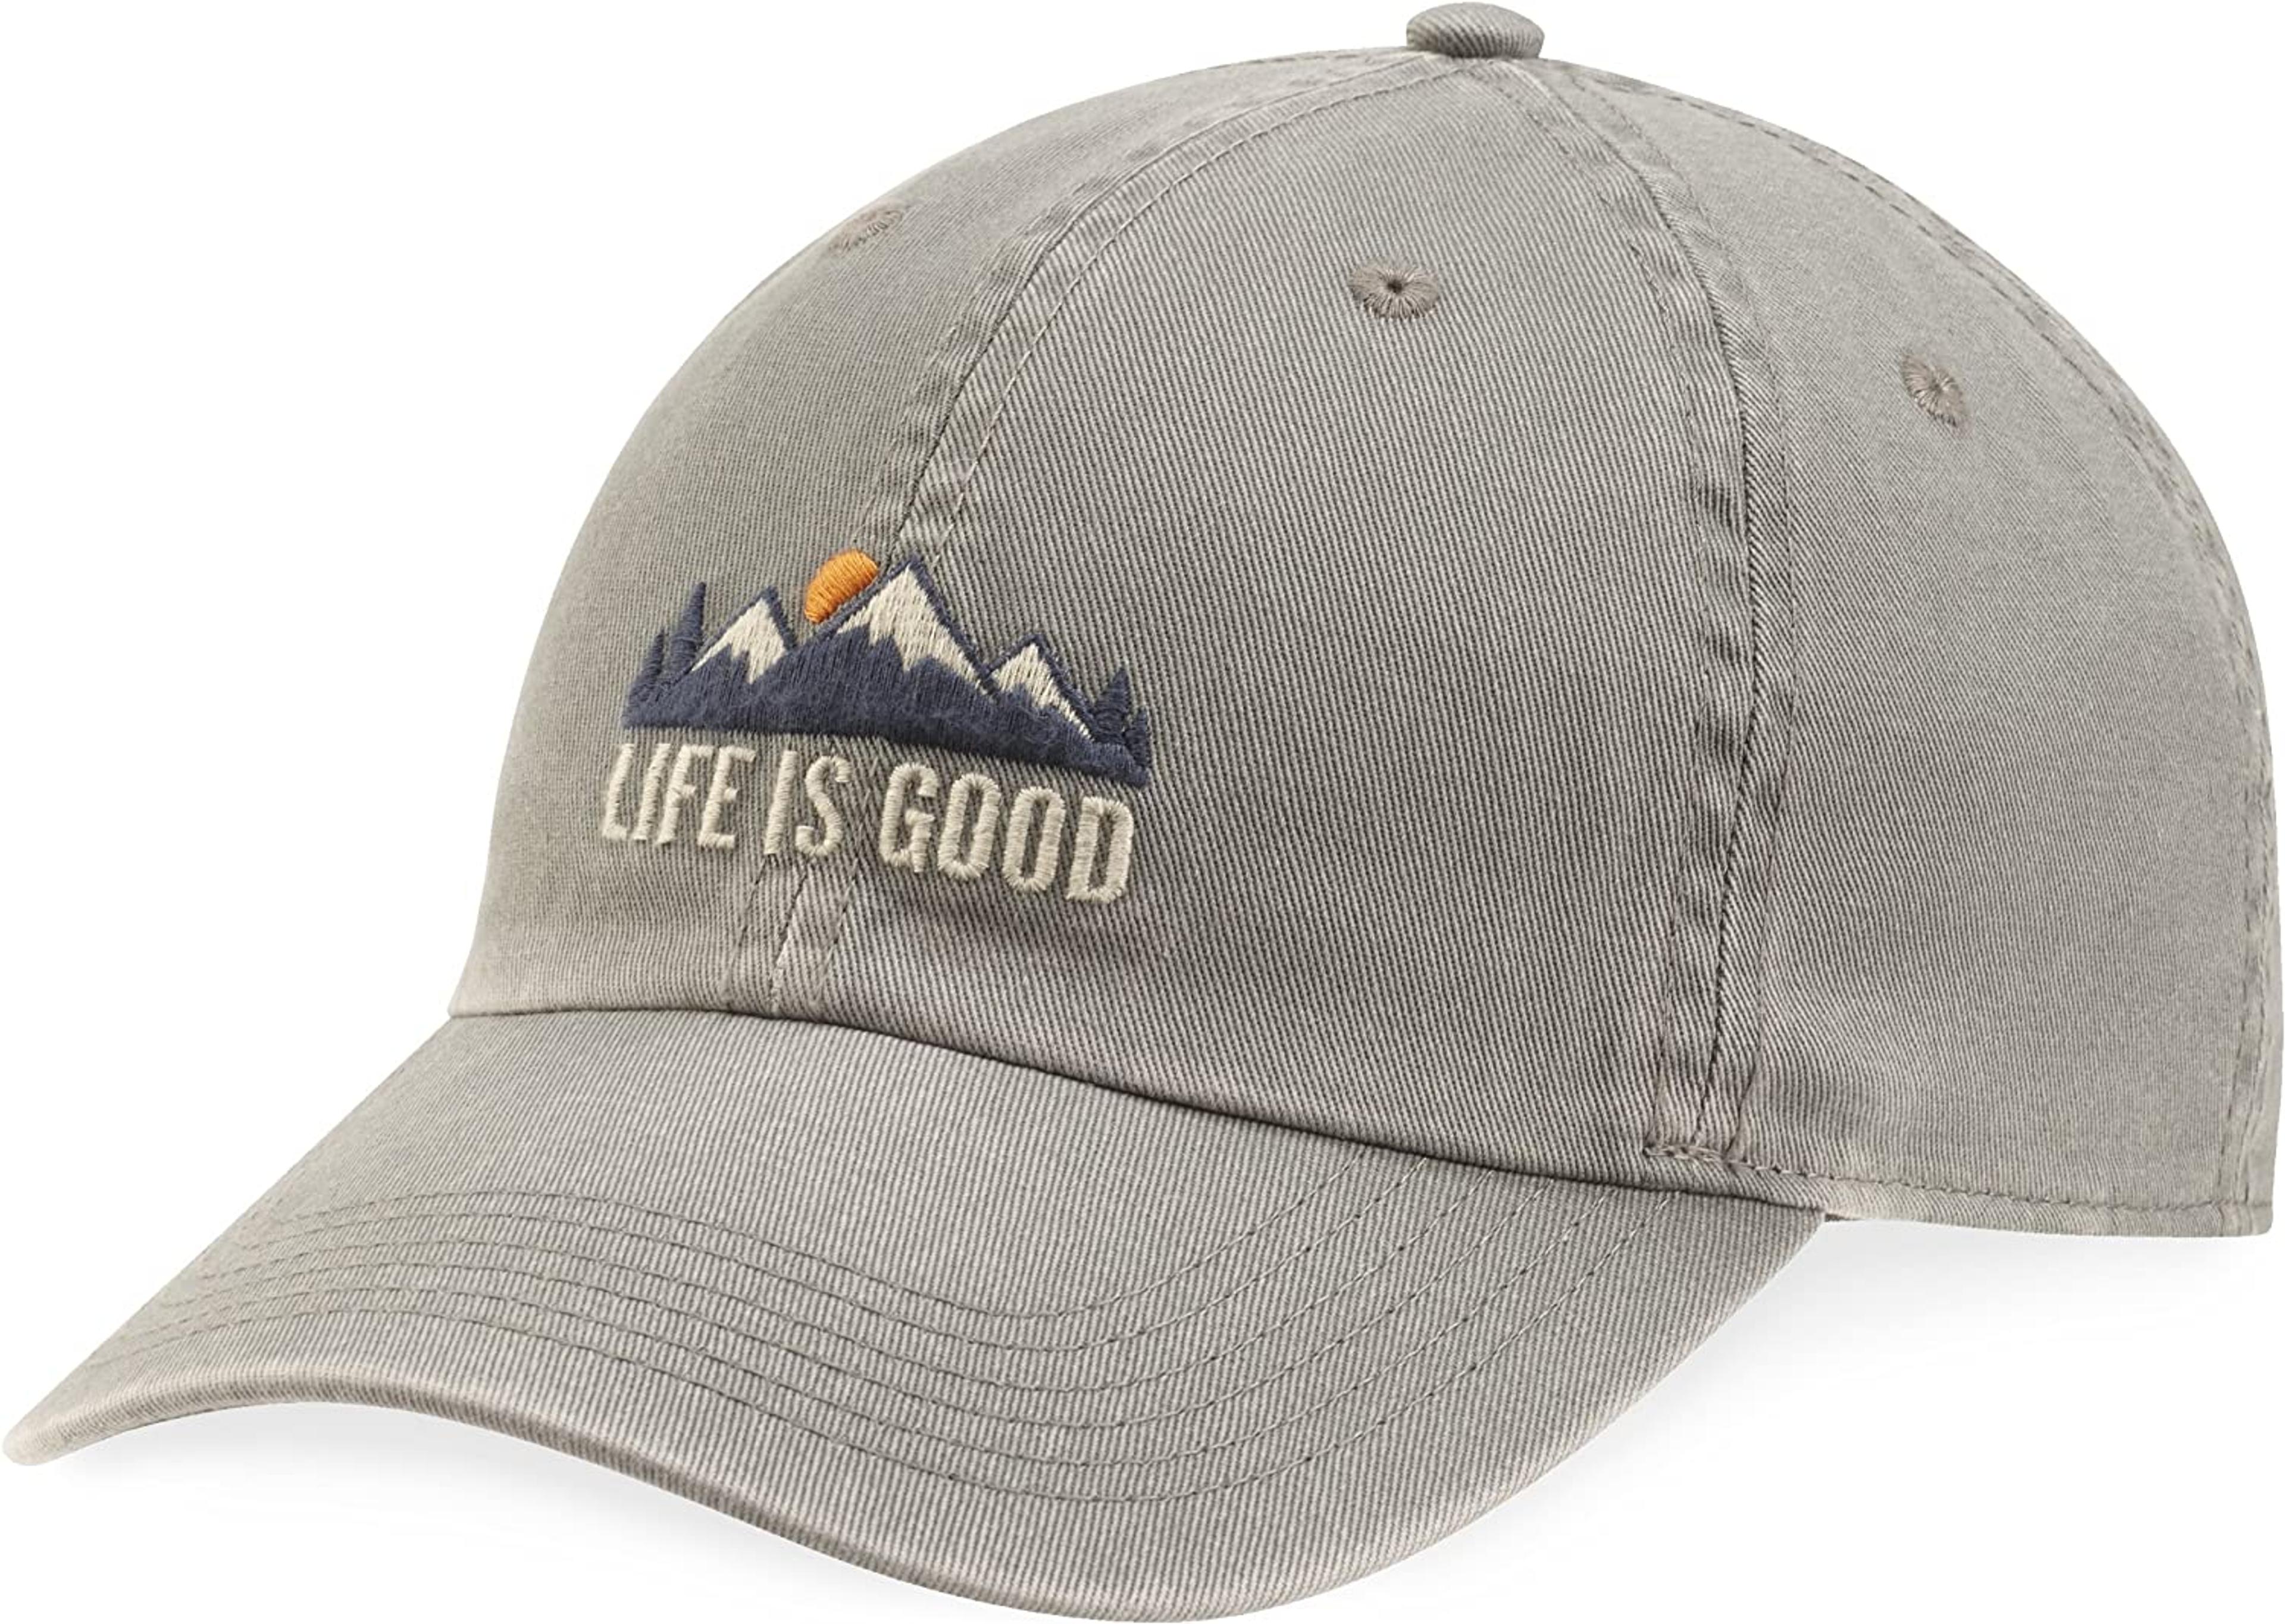 Life is Good Adult Chill Cap Baseball Hat